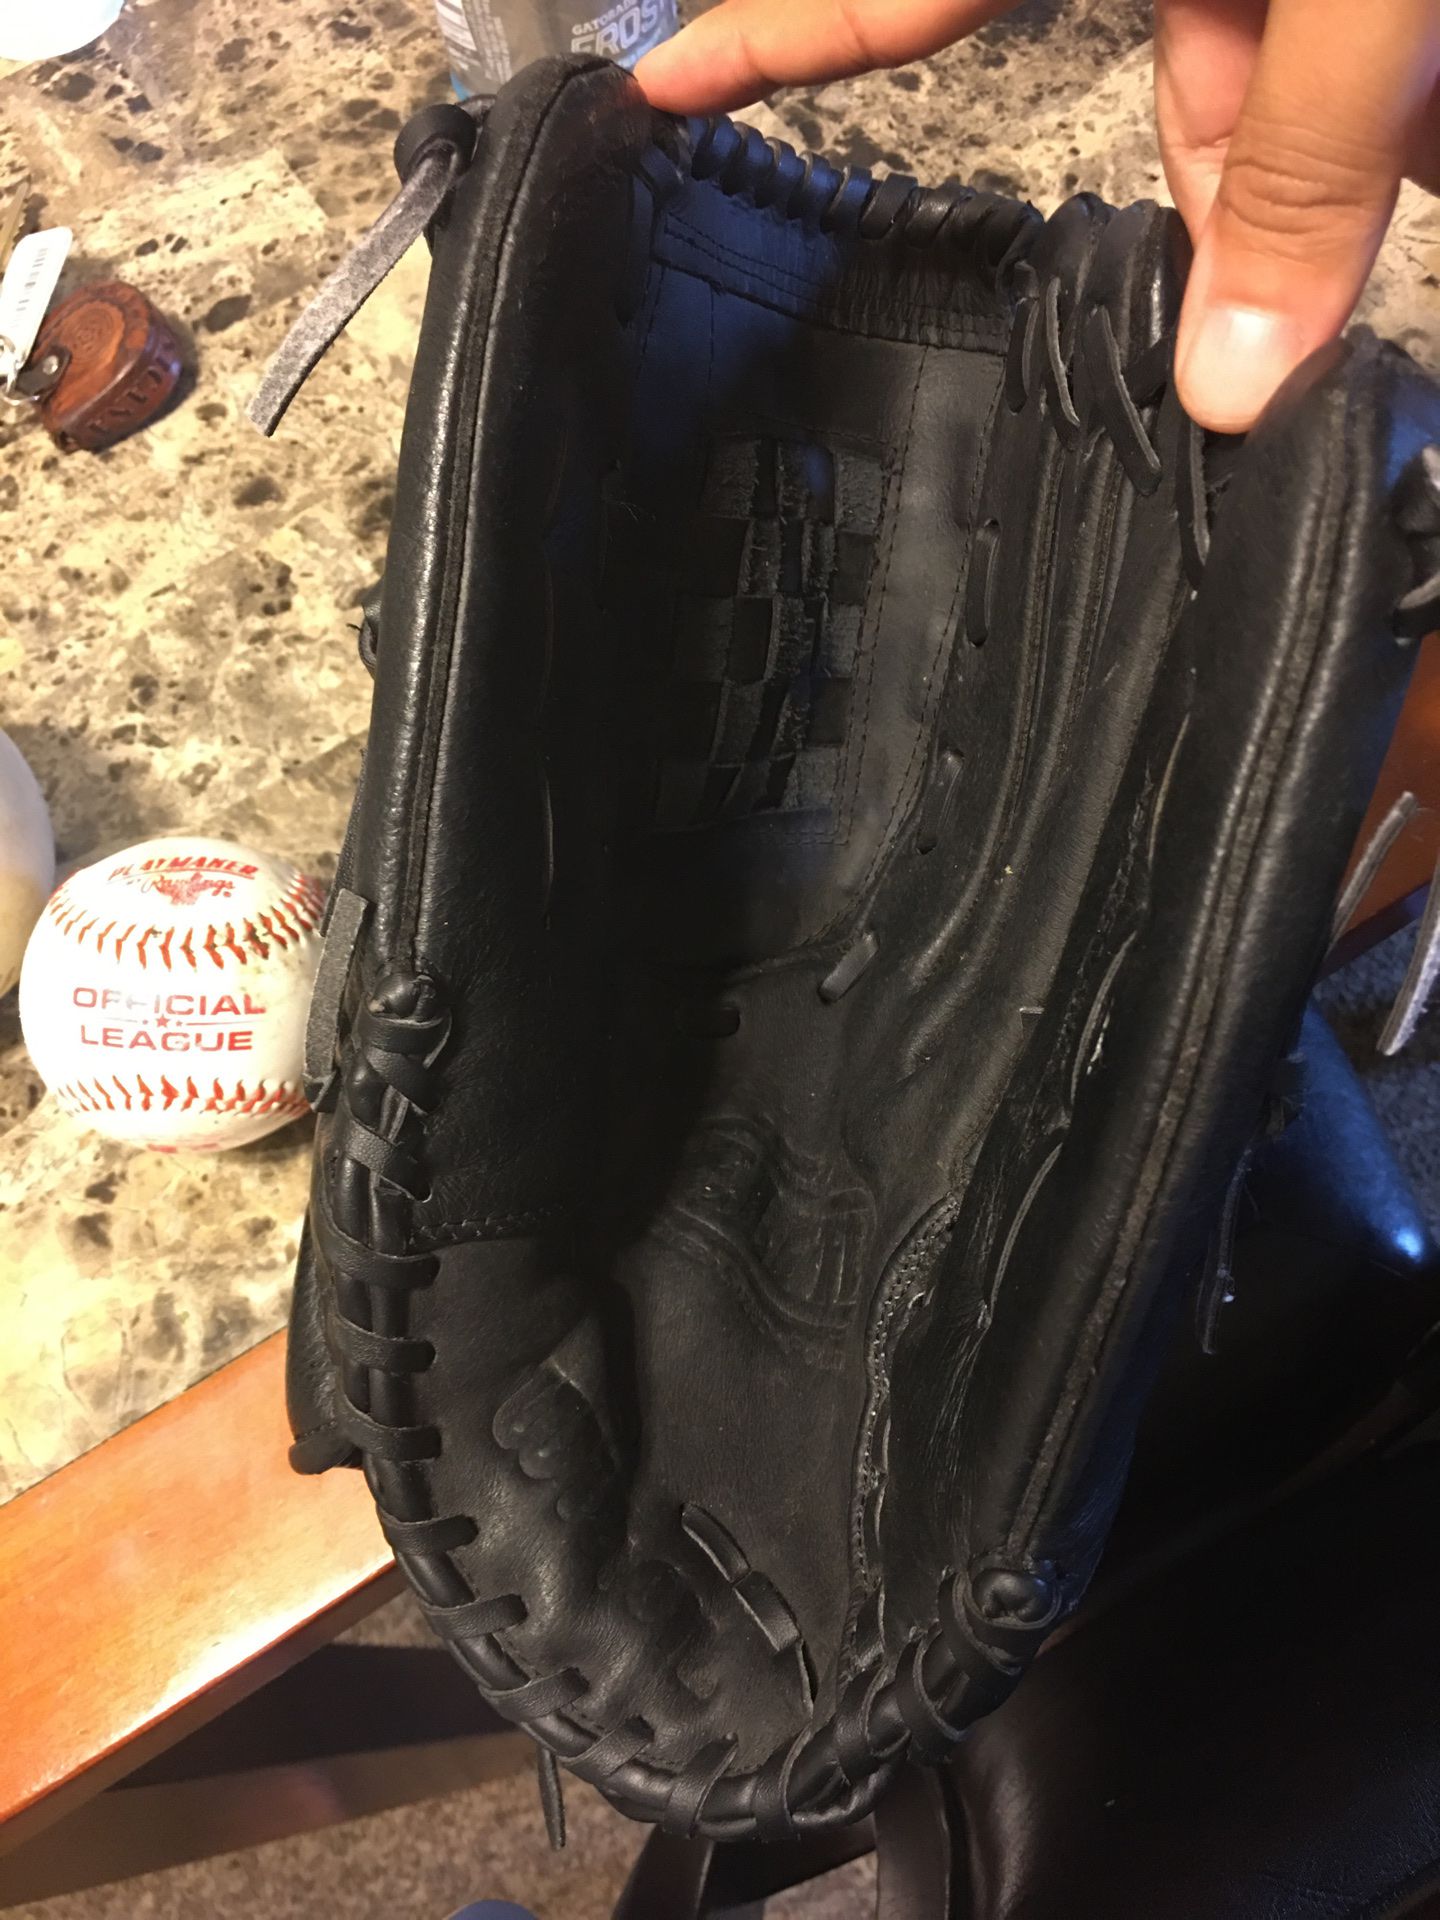 Wilson leather baseball glove